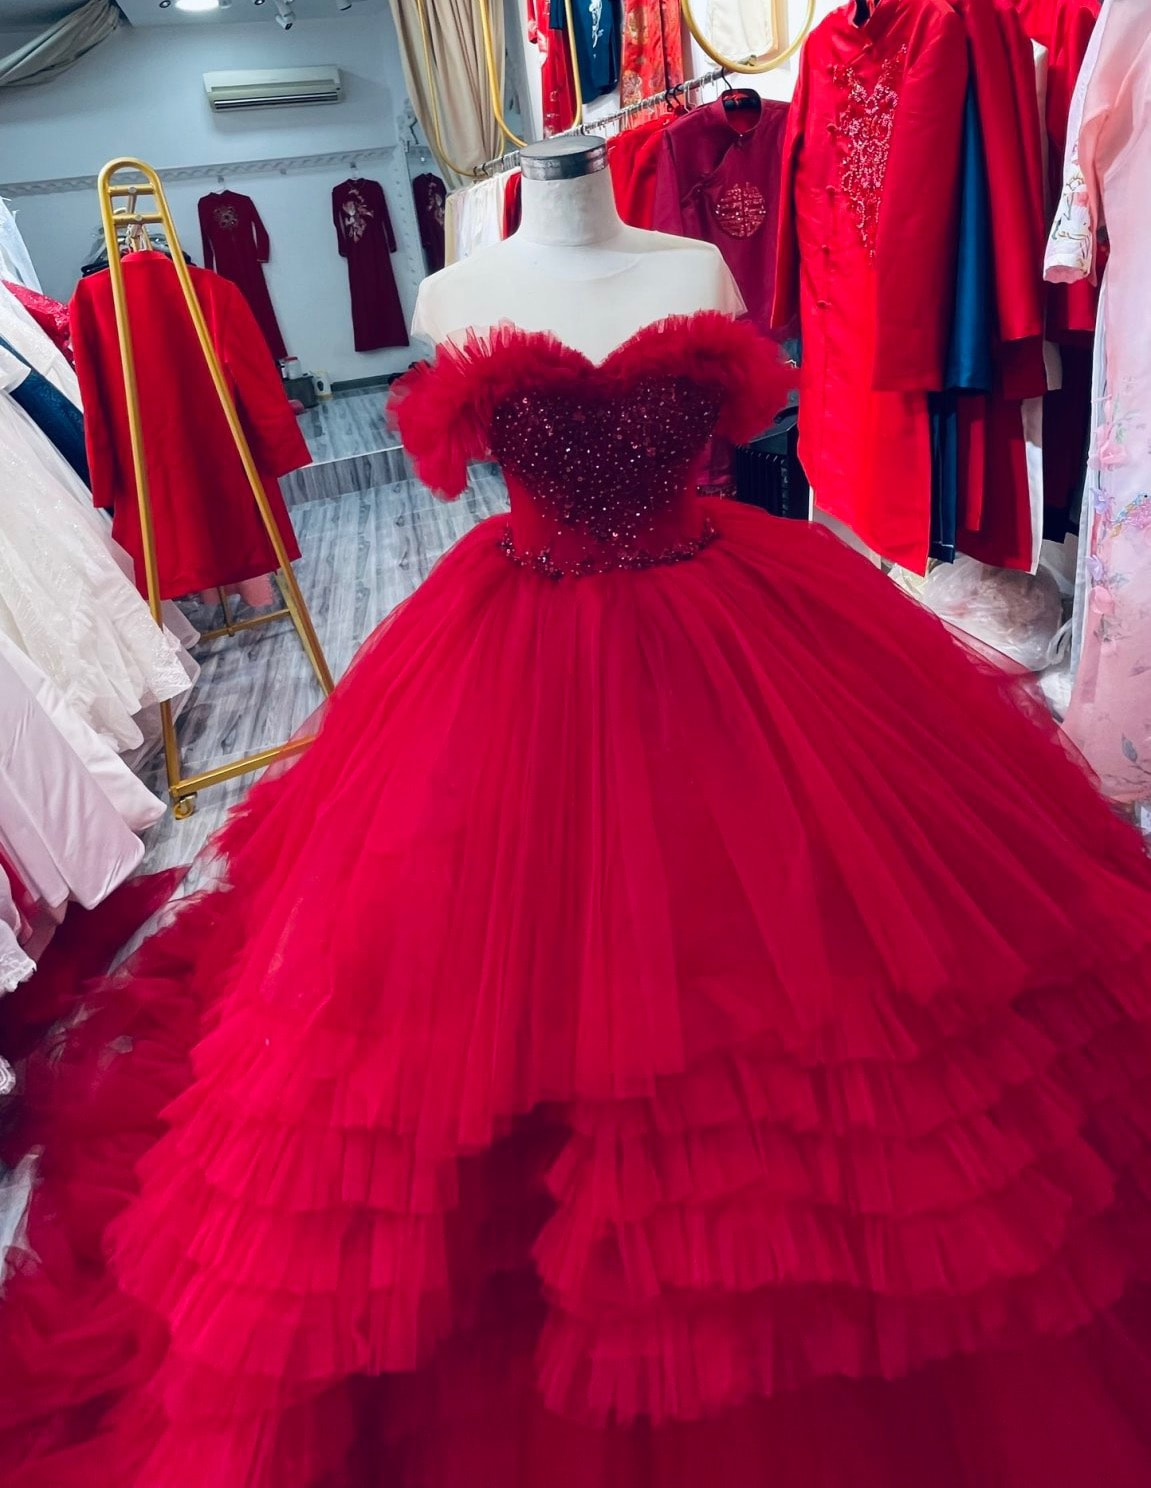 2021 Big Ball Gown Puffy Princess Wedding Dress - Mscooco.co.uk